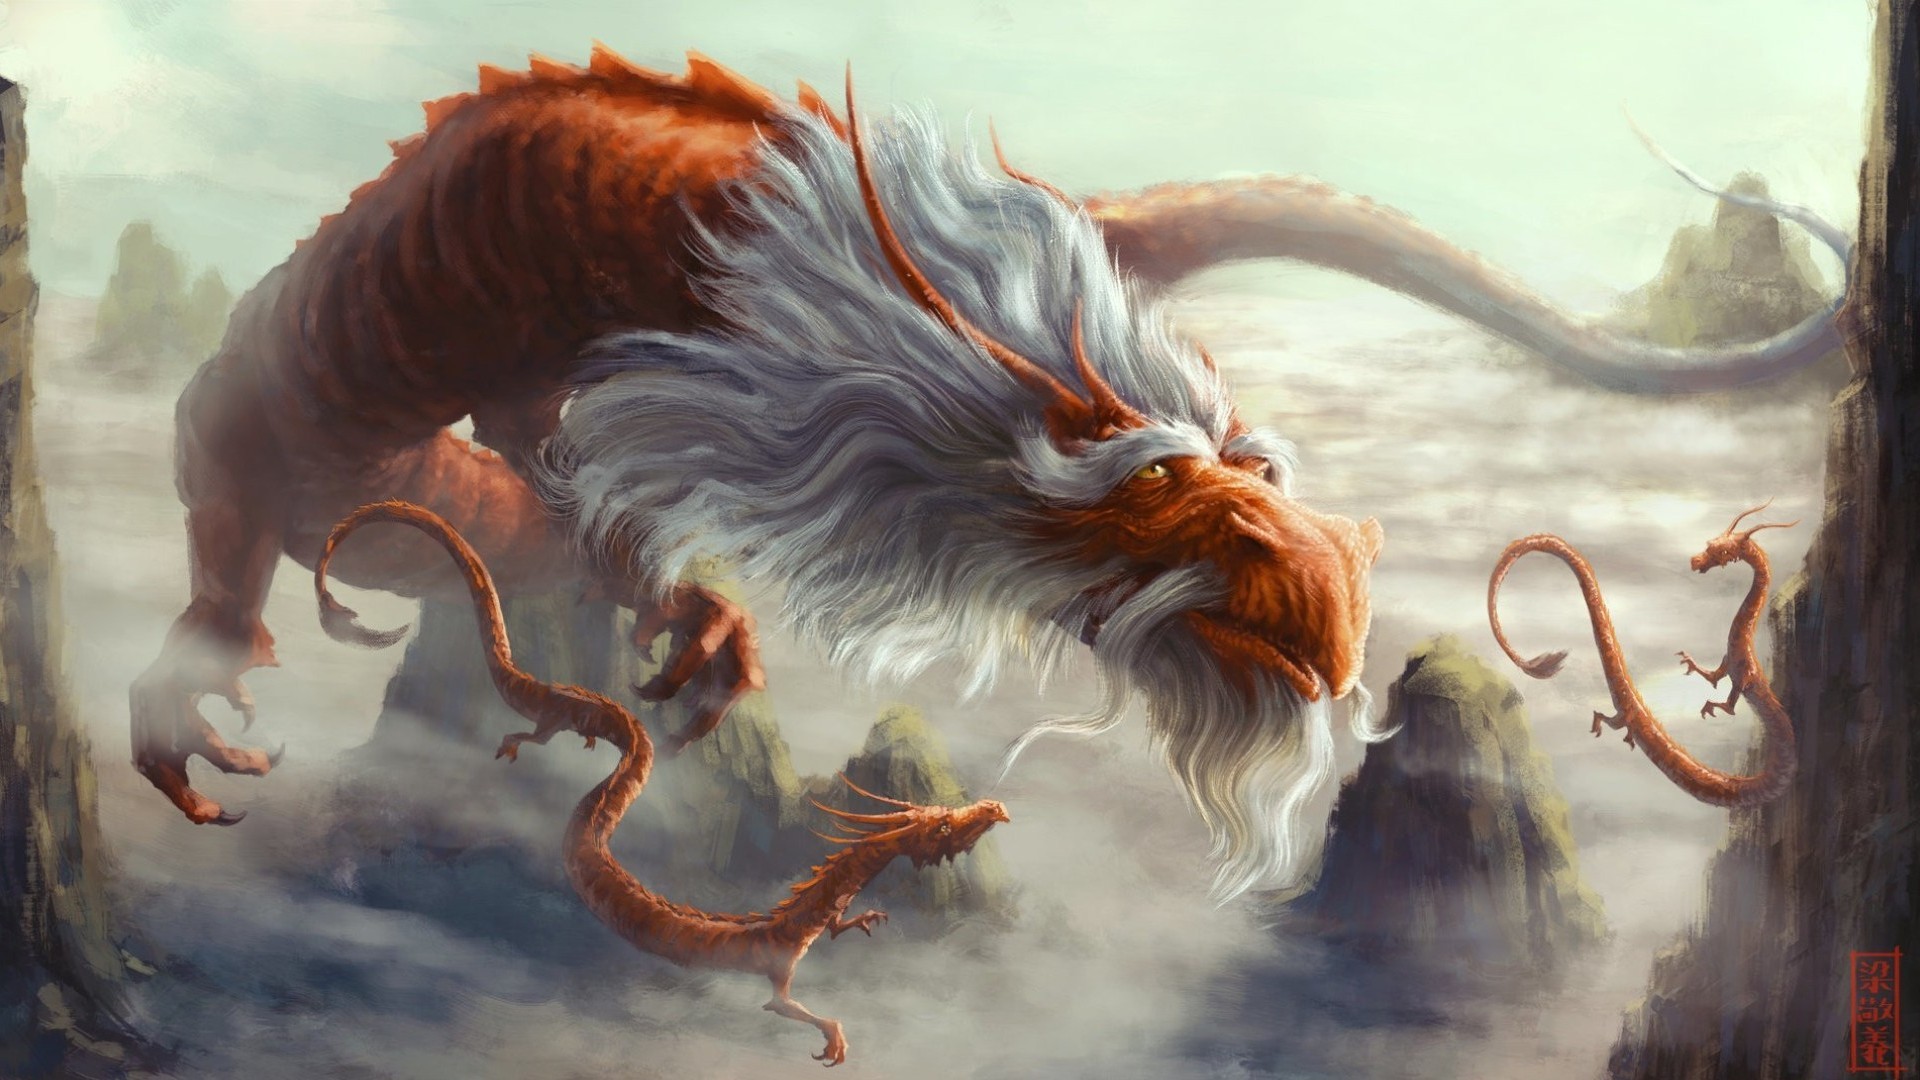 1920x1080 Fantasy Dragon Wallpaper | Fantasy dragon pictures | Pinterest | Fantasy  dragon, Dragons and Dragon pictures